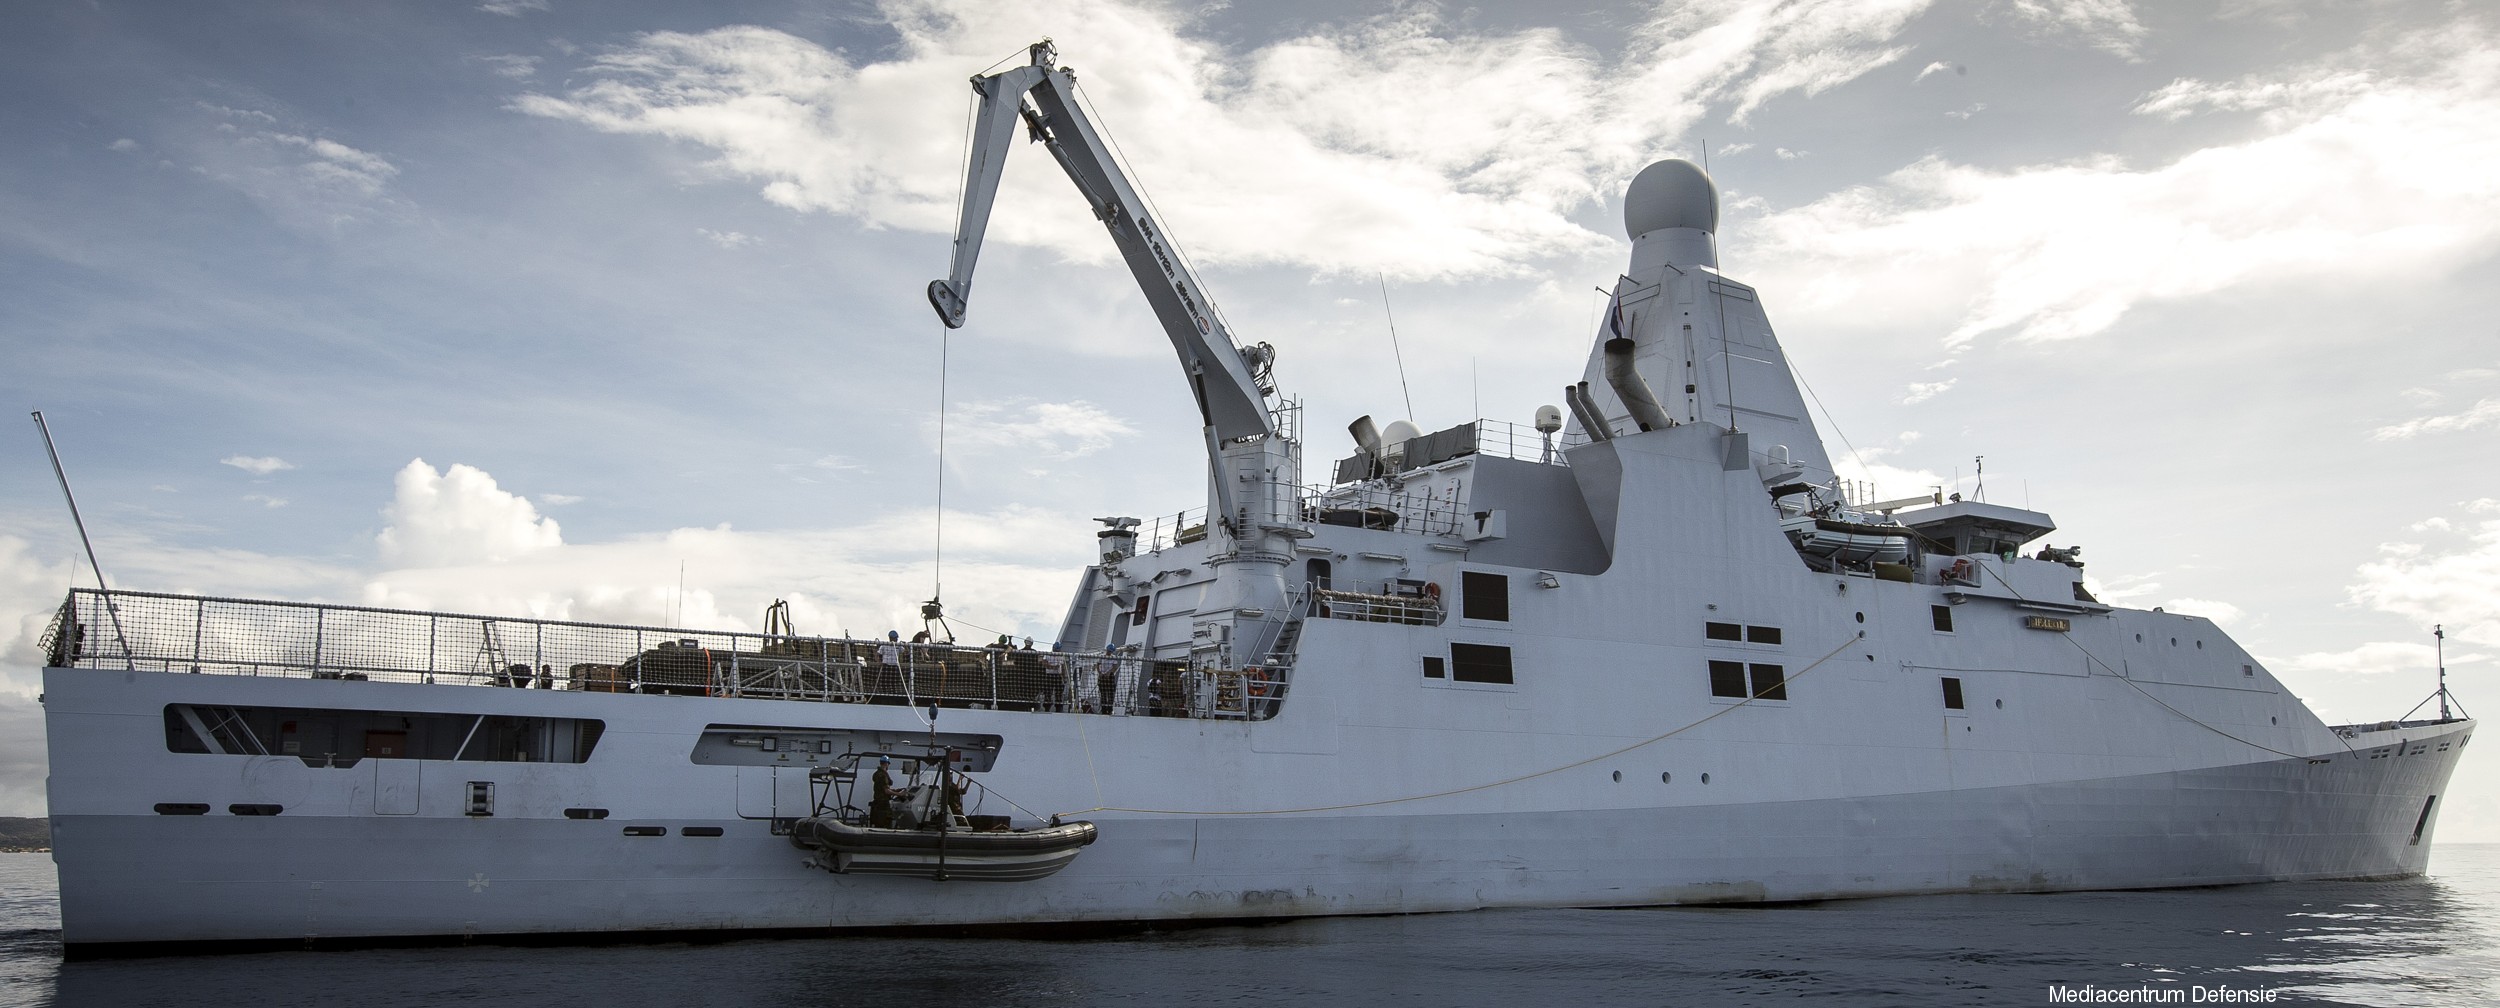 p-840 hnlms holland offshore patrol vessel opv royal netherlands navy 08